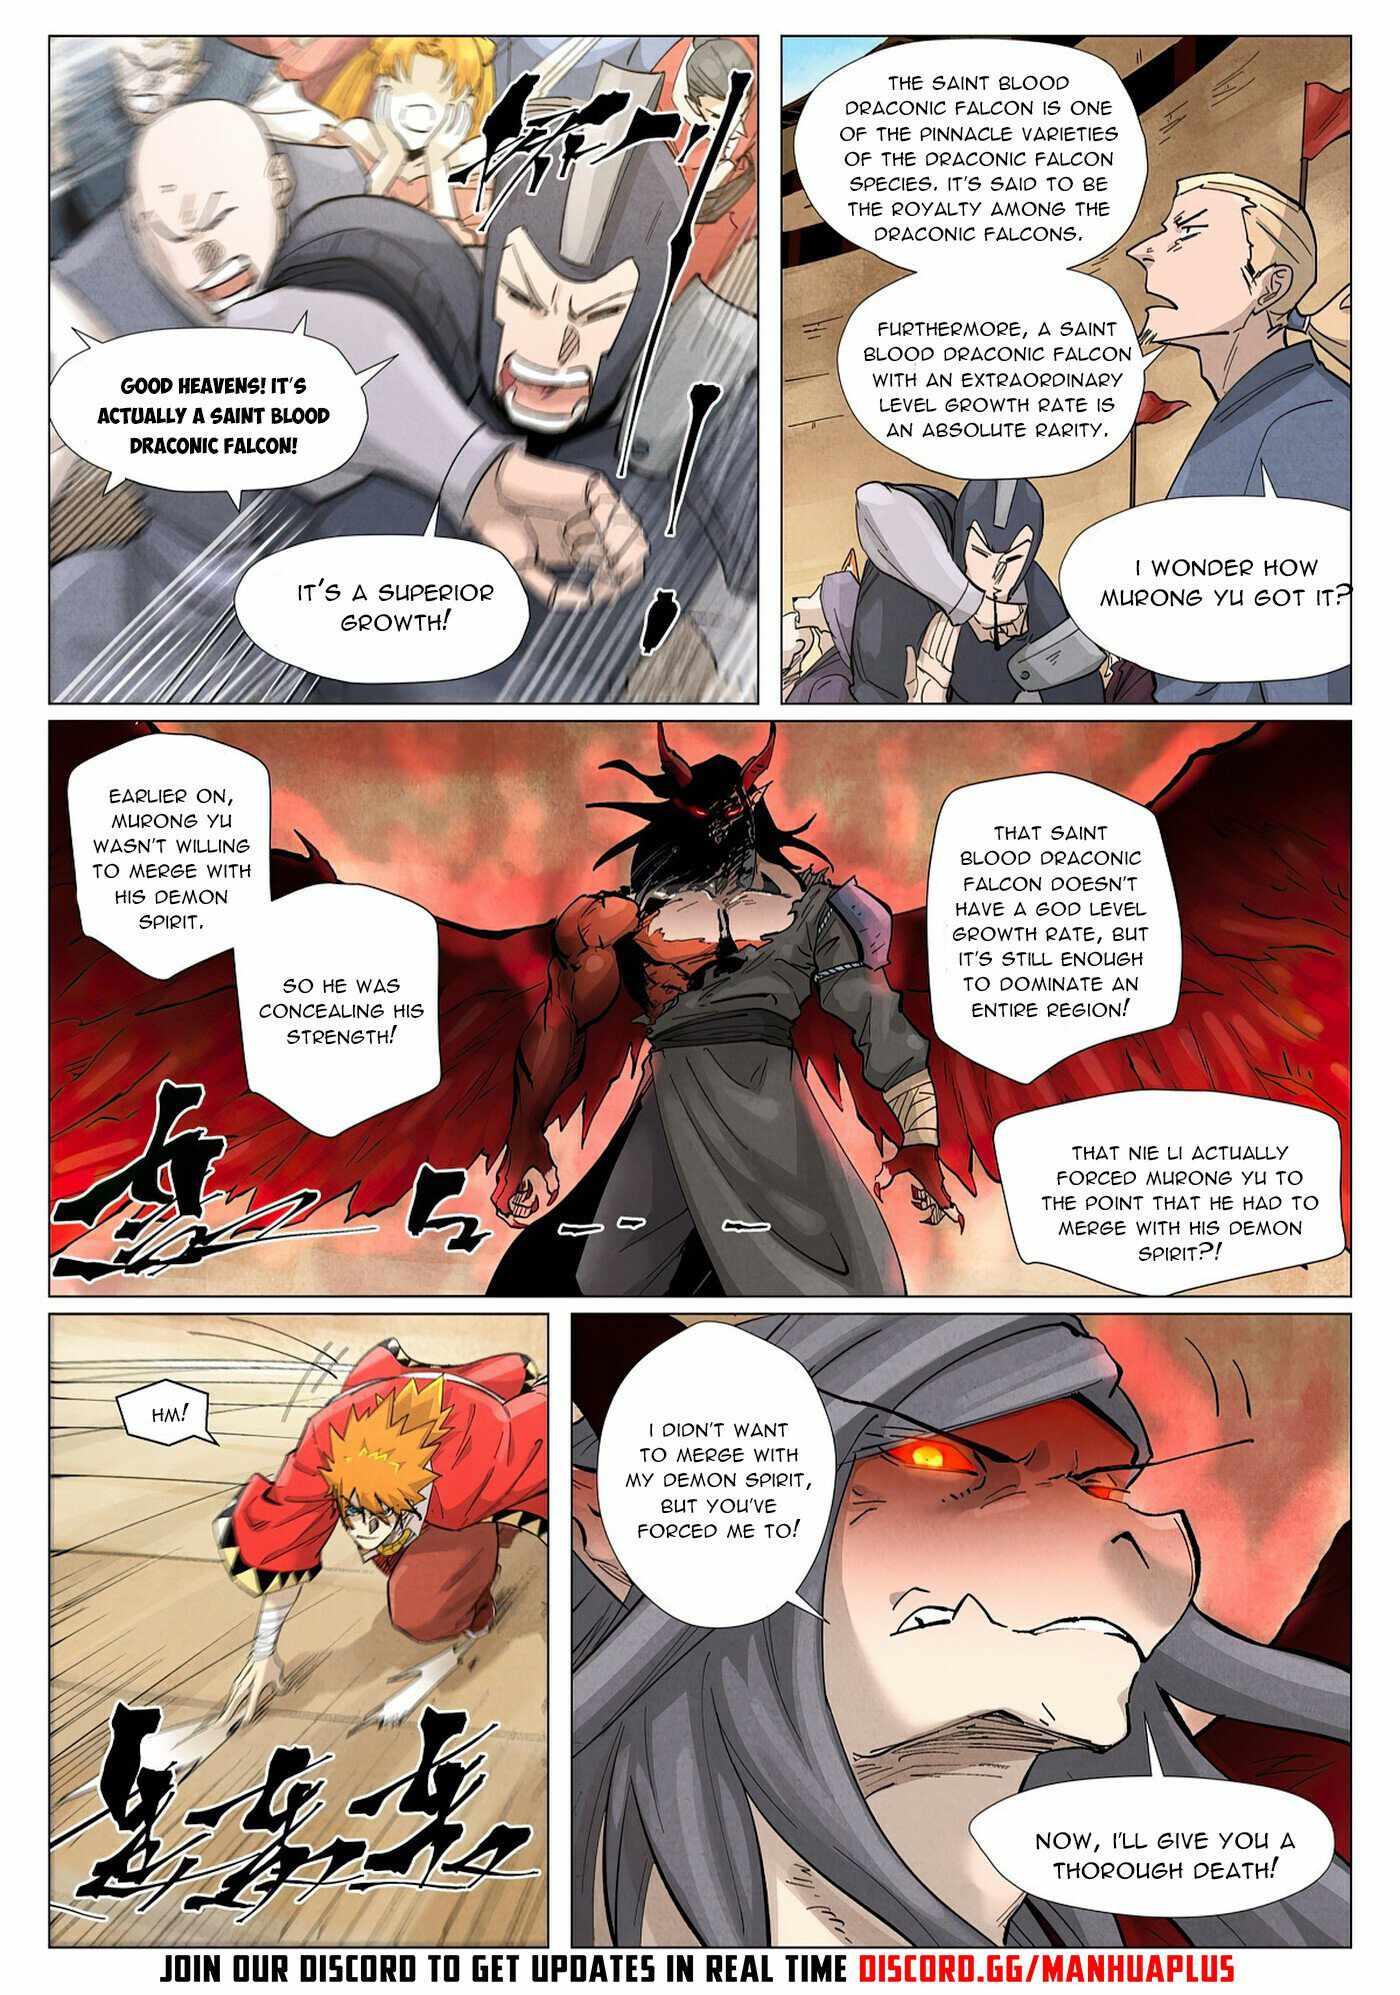 Tales Of Demons And Gods Chapter 396.5 page 8 - Mangakakalot